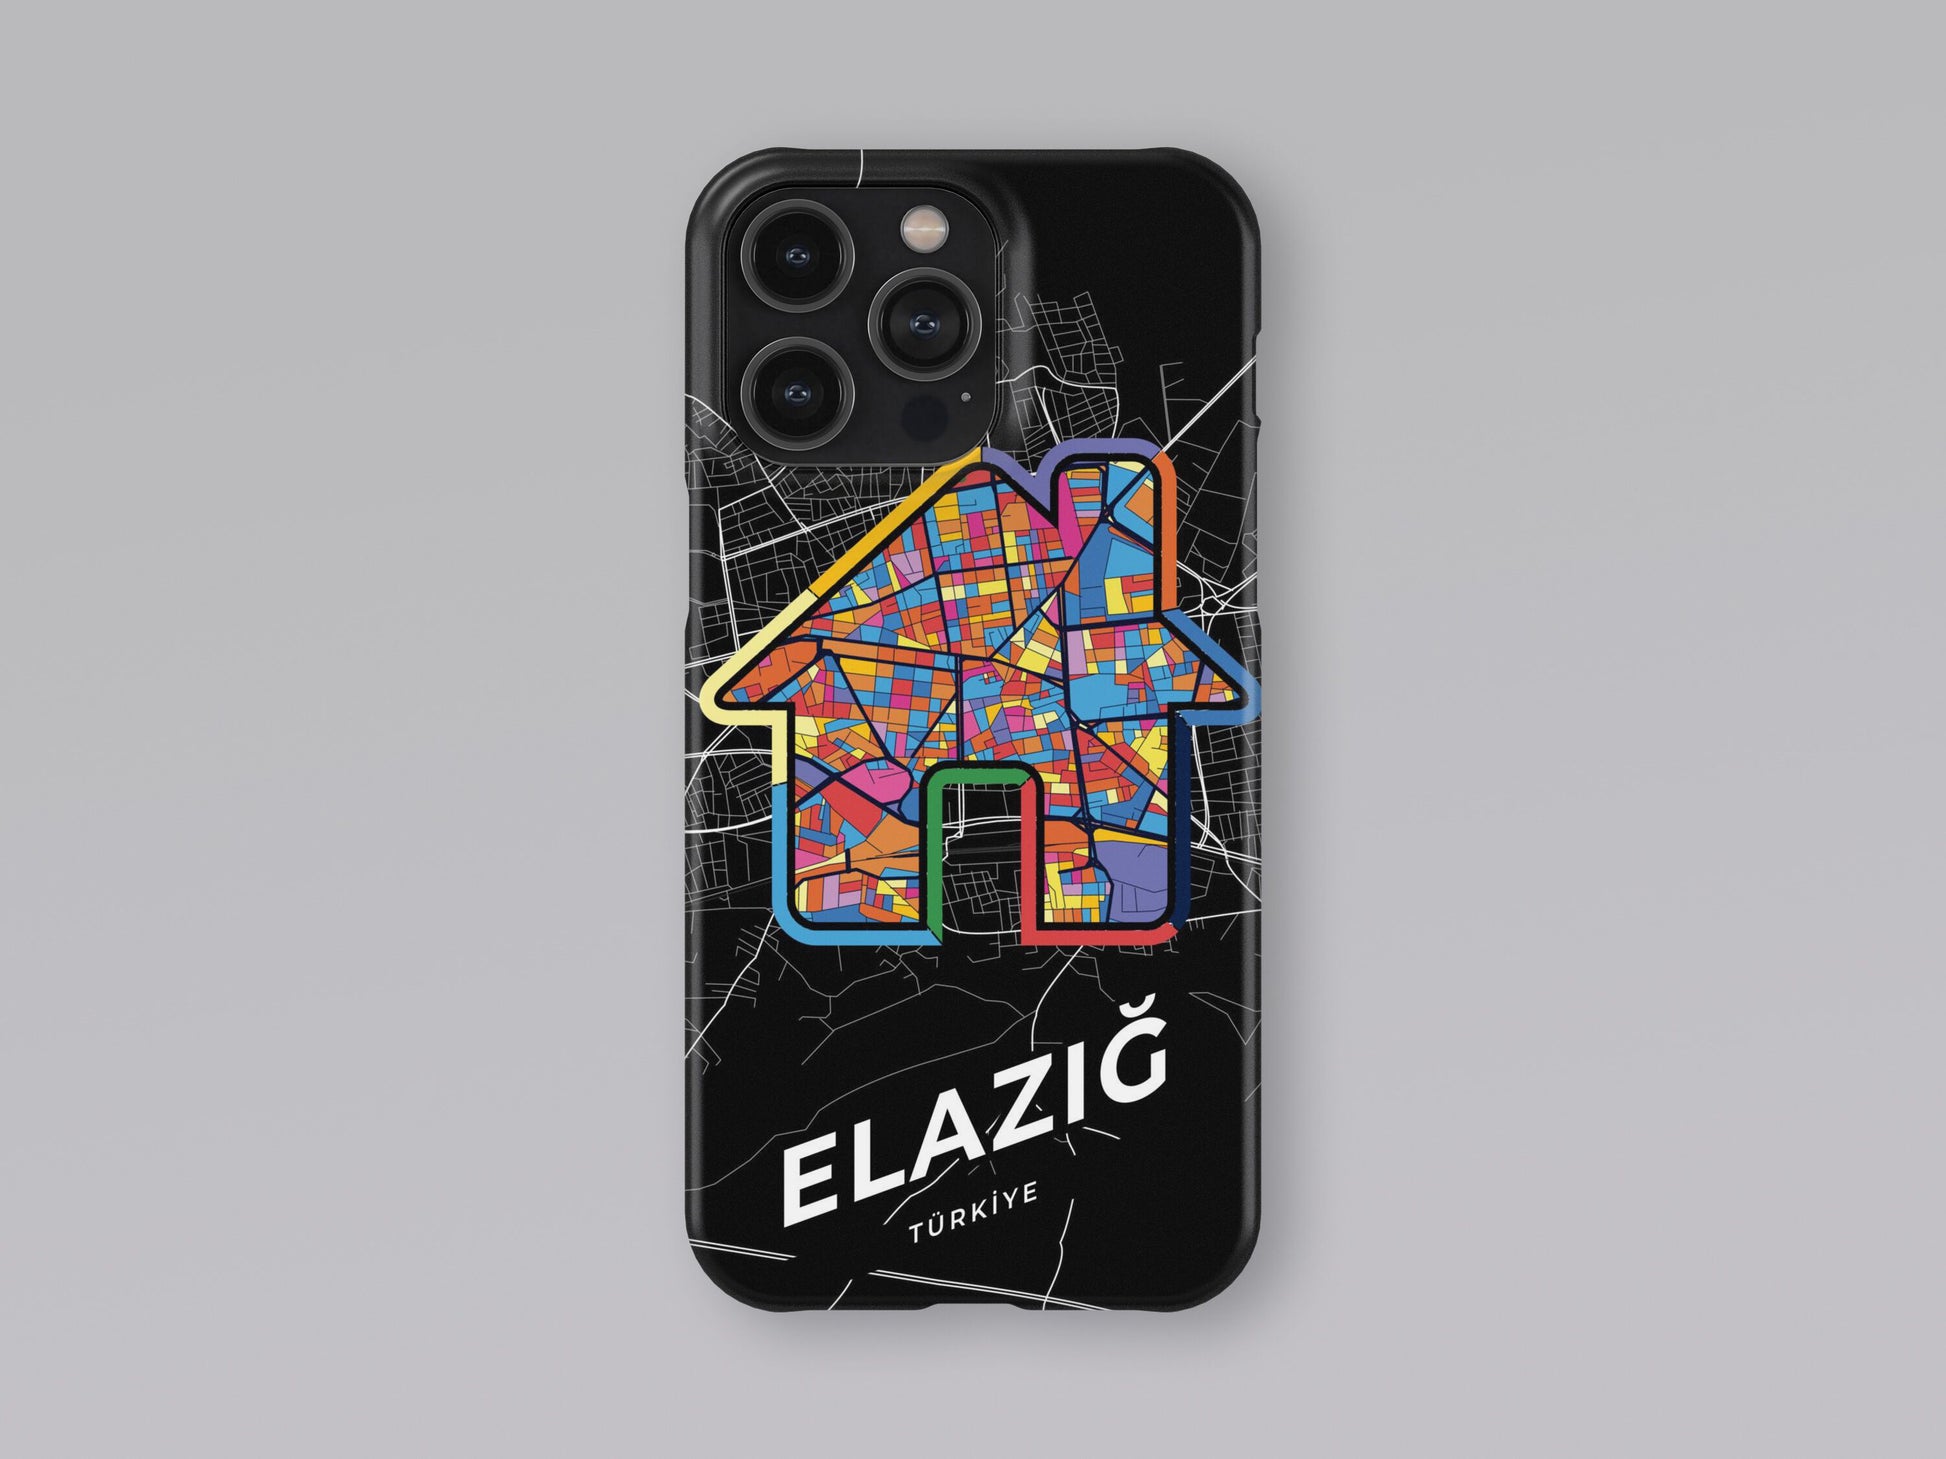 Elâzığ Turkey slim phone case with colorful icon. Birthday, wedding or housewarming gift. Couple match cases. 3